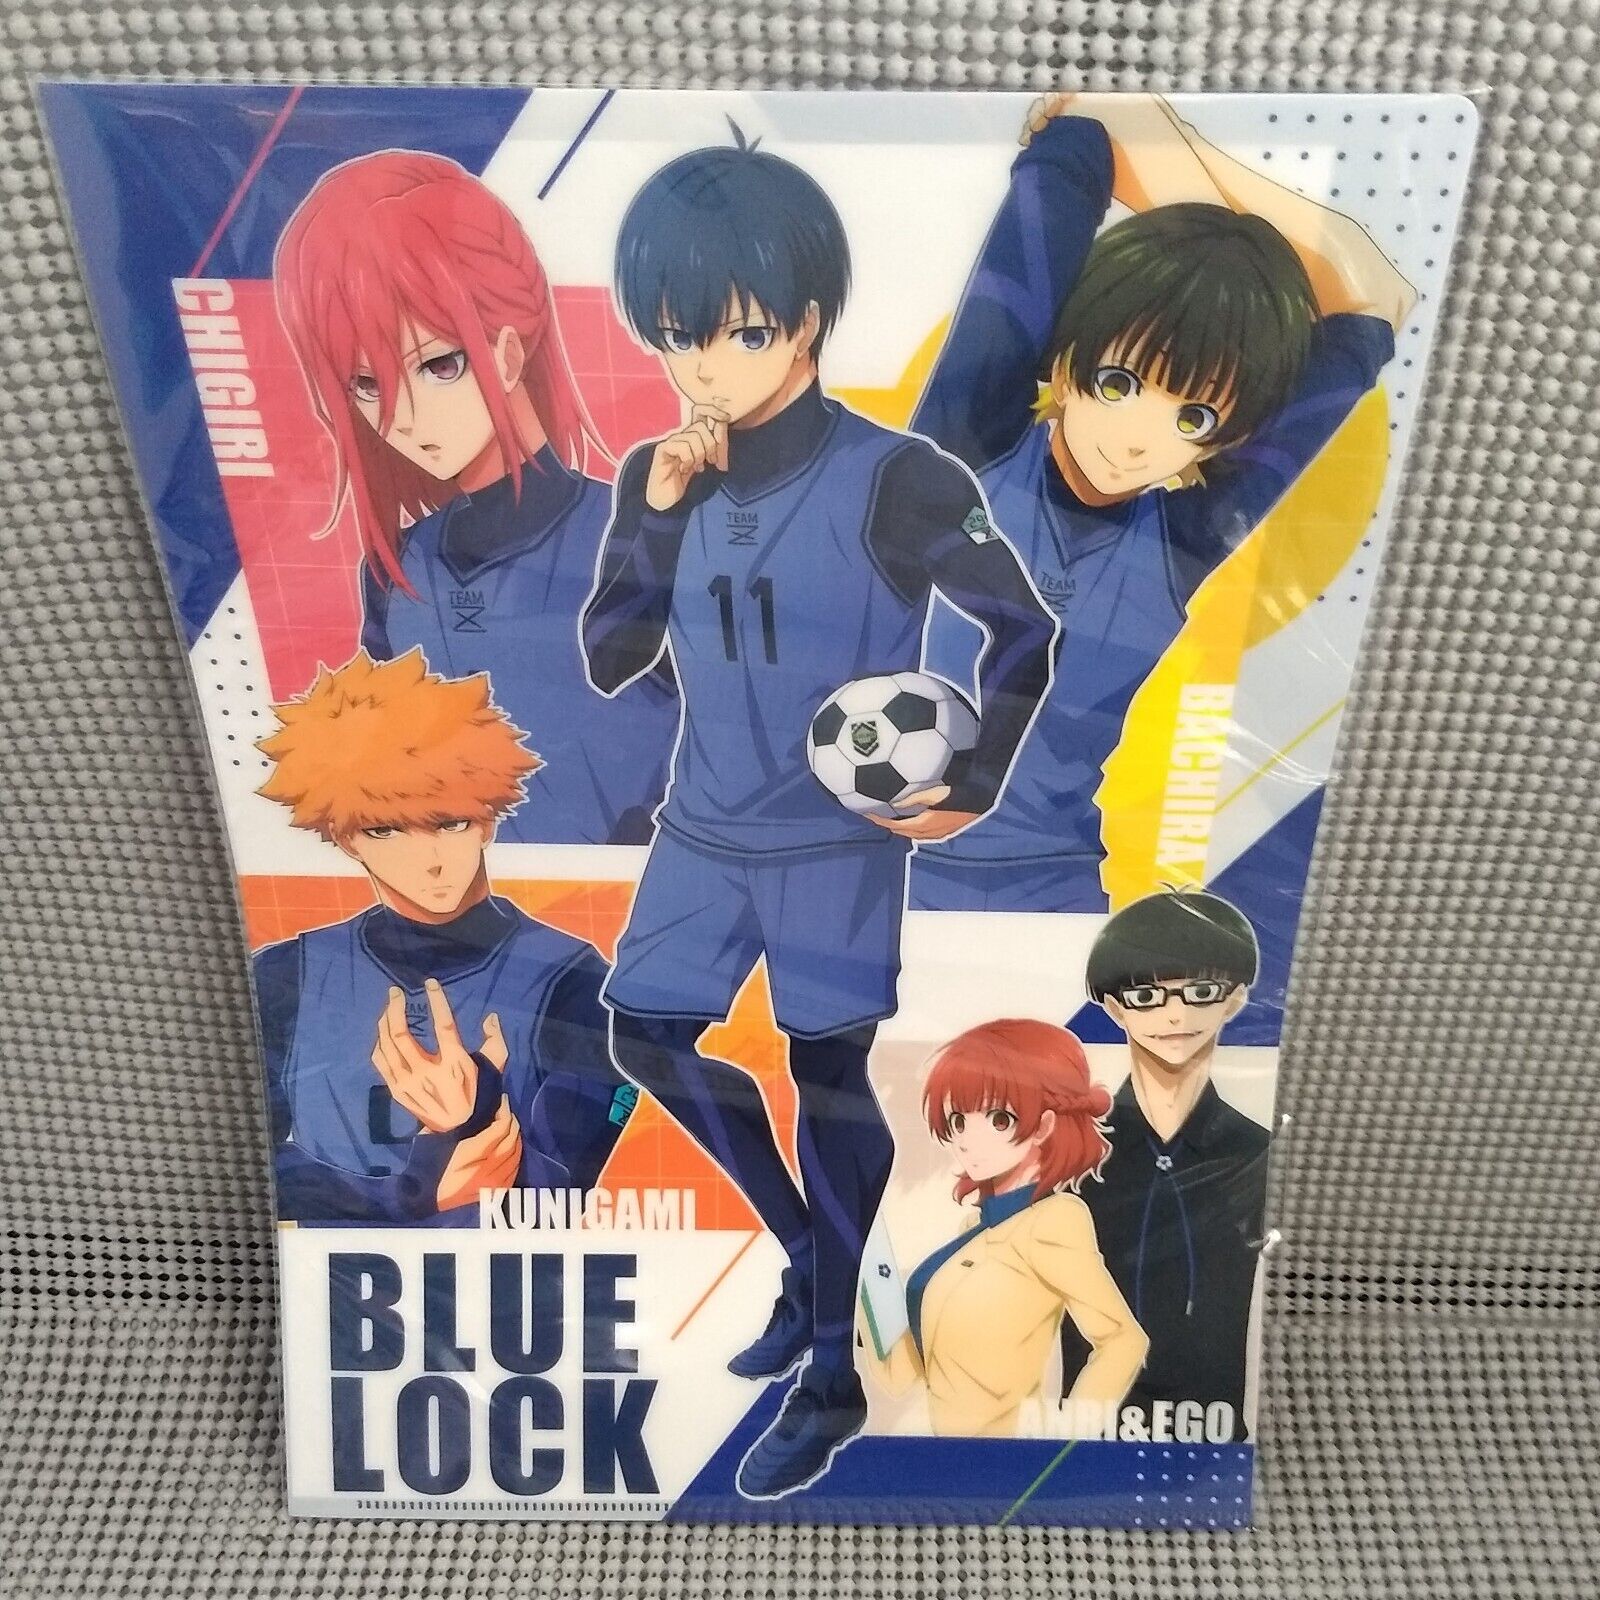 BLUELOCK A4 Single Pocket Clear File Folder Blue Lock White Anime